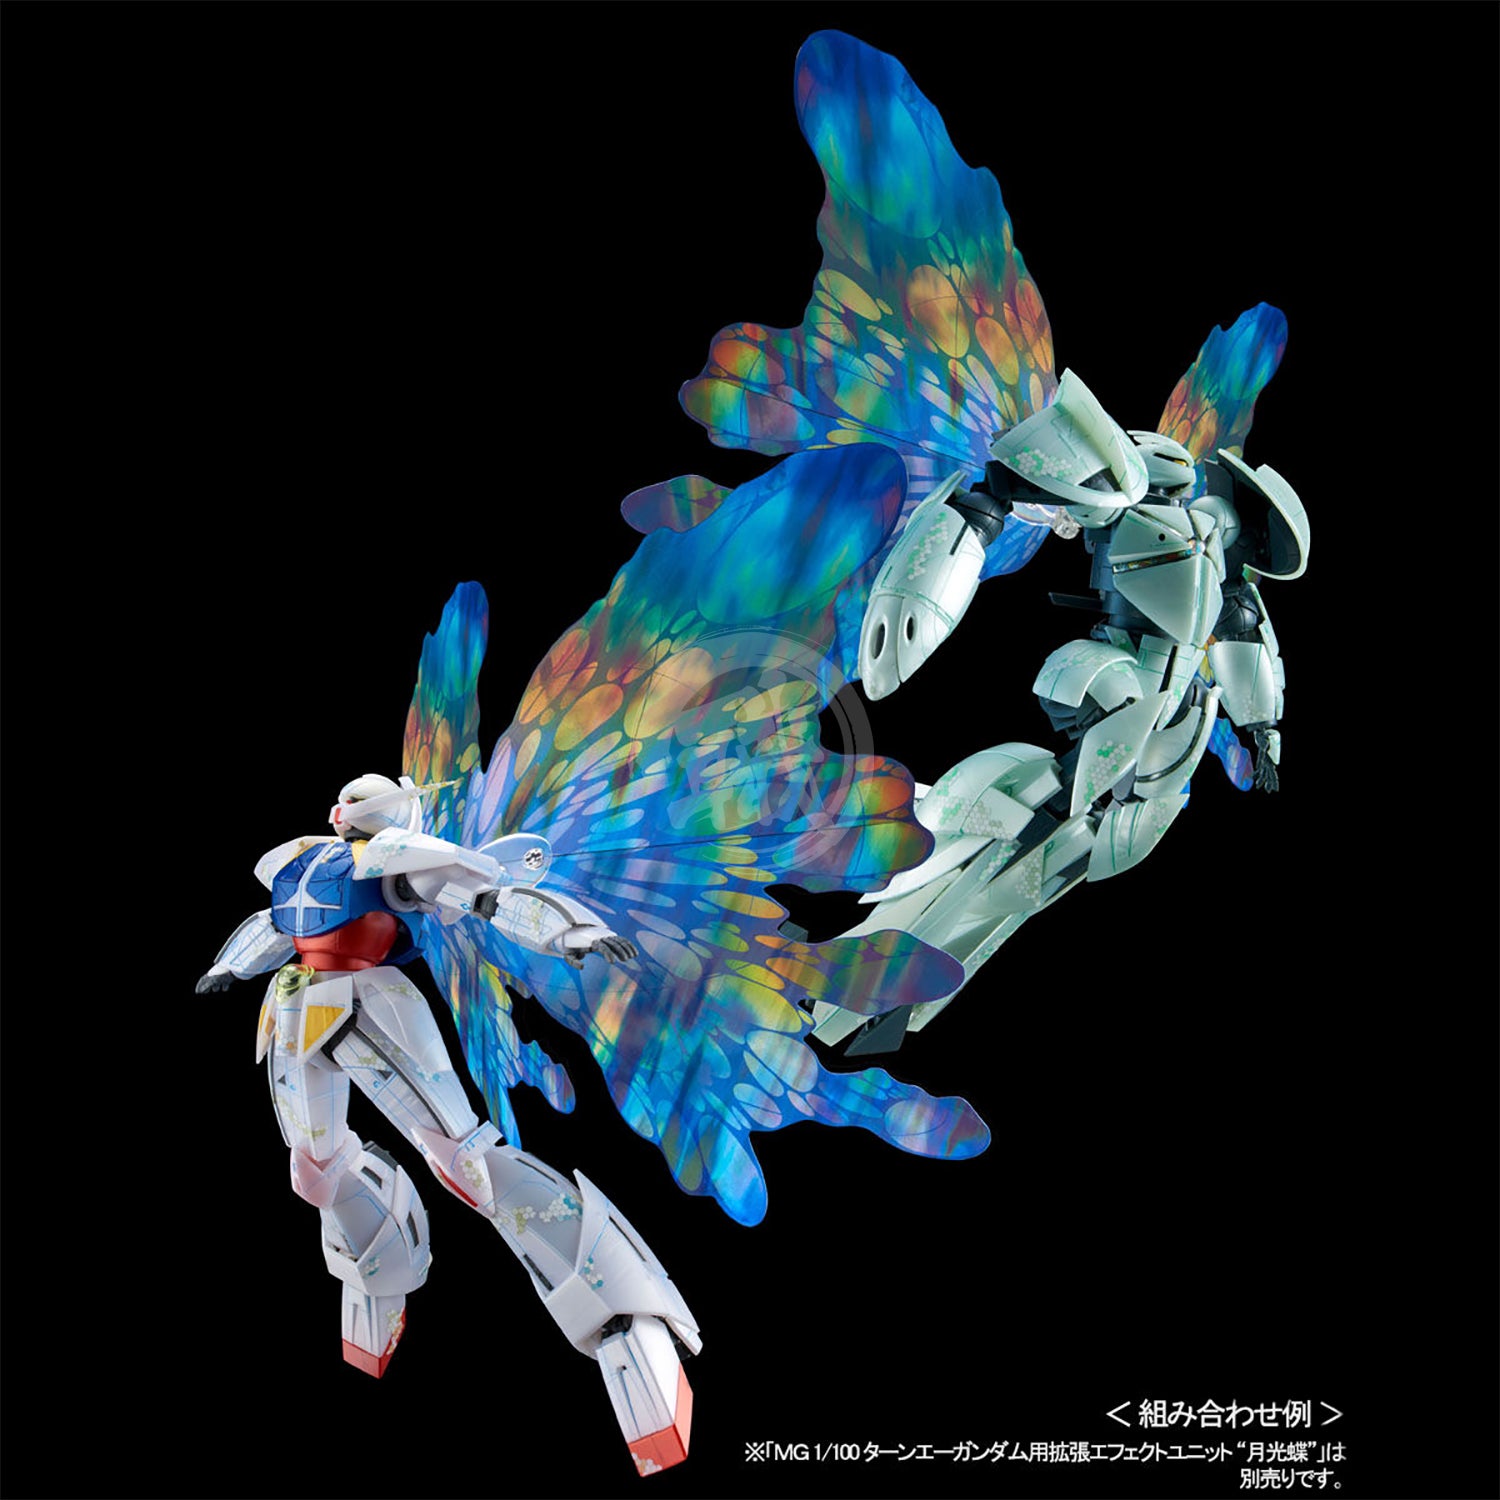 MG Expansion Effect Unit "Moonlight Butterfly" For Turn A Gundam - ShokuninGunpla